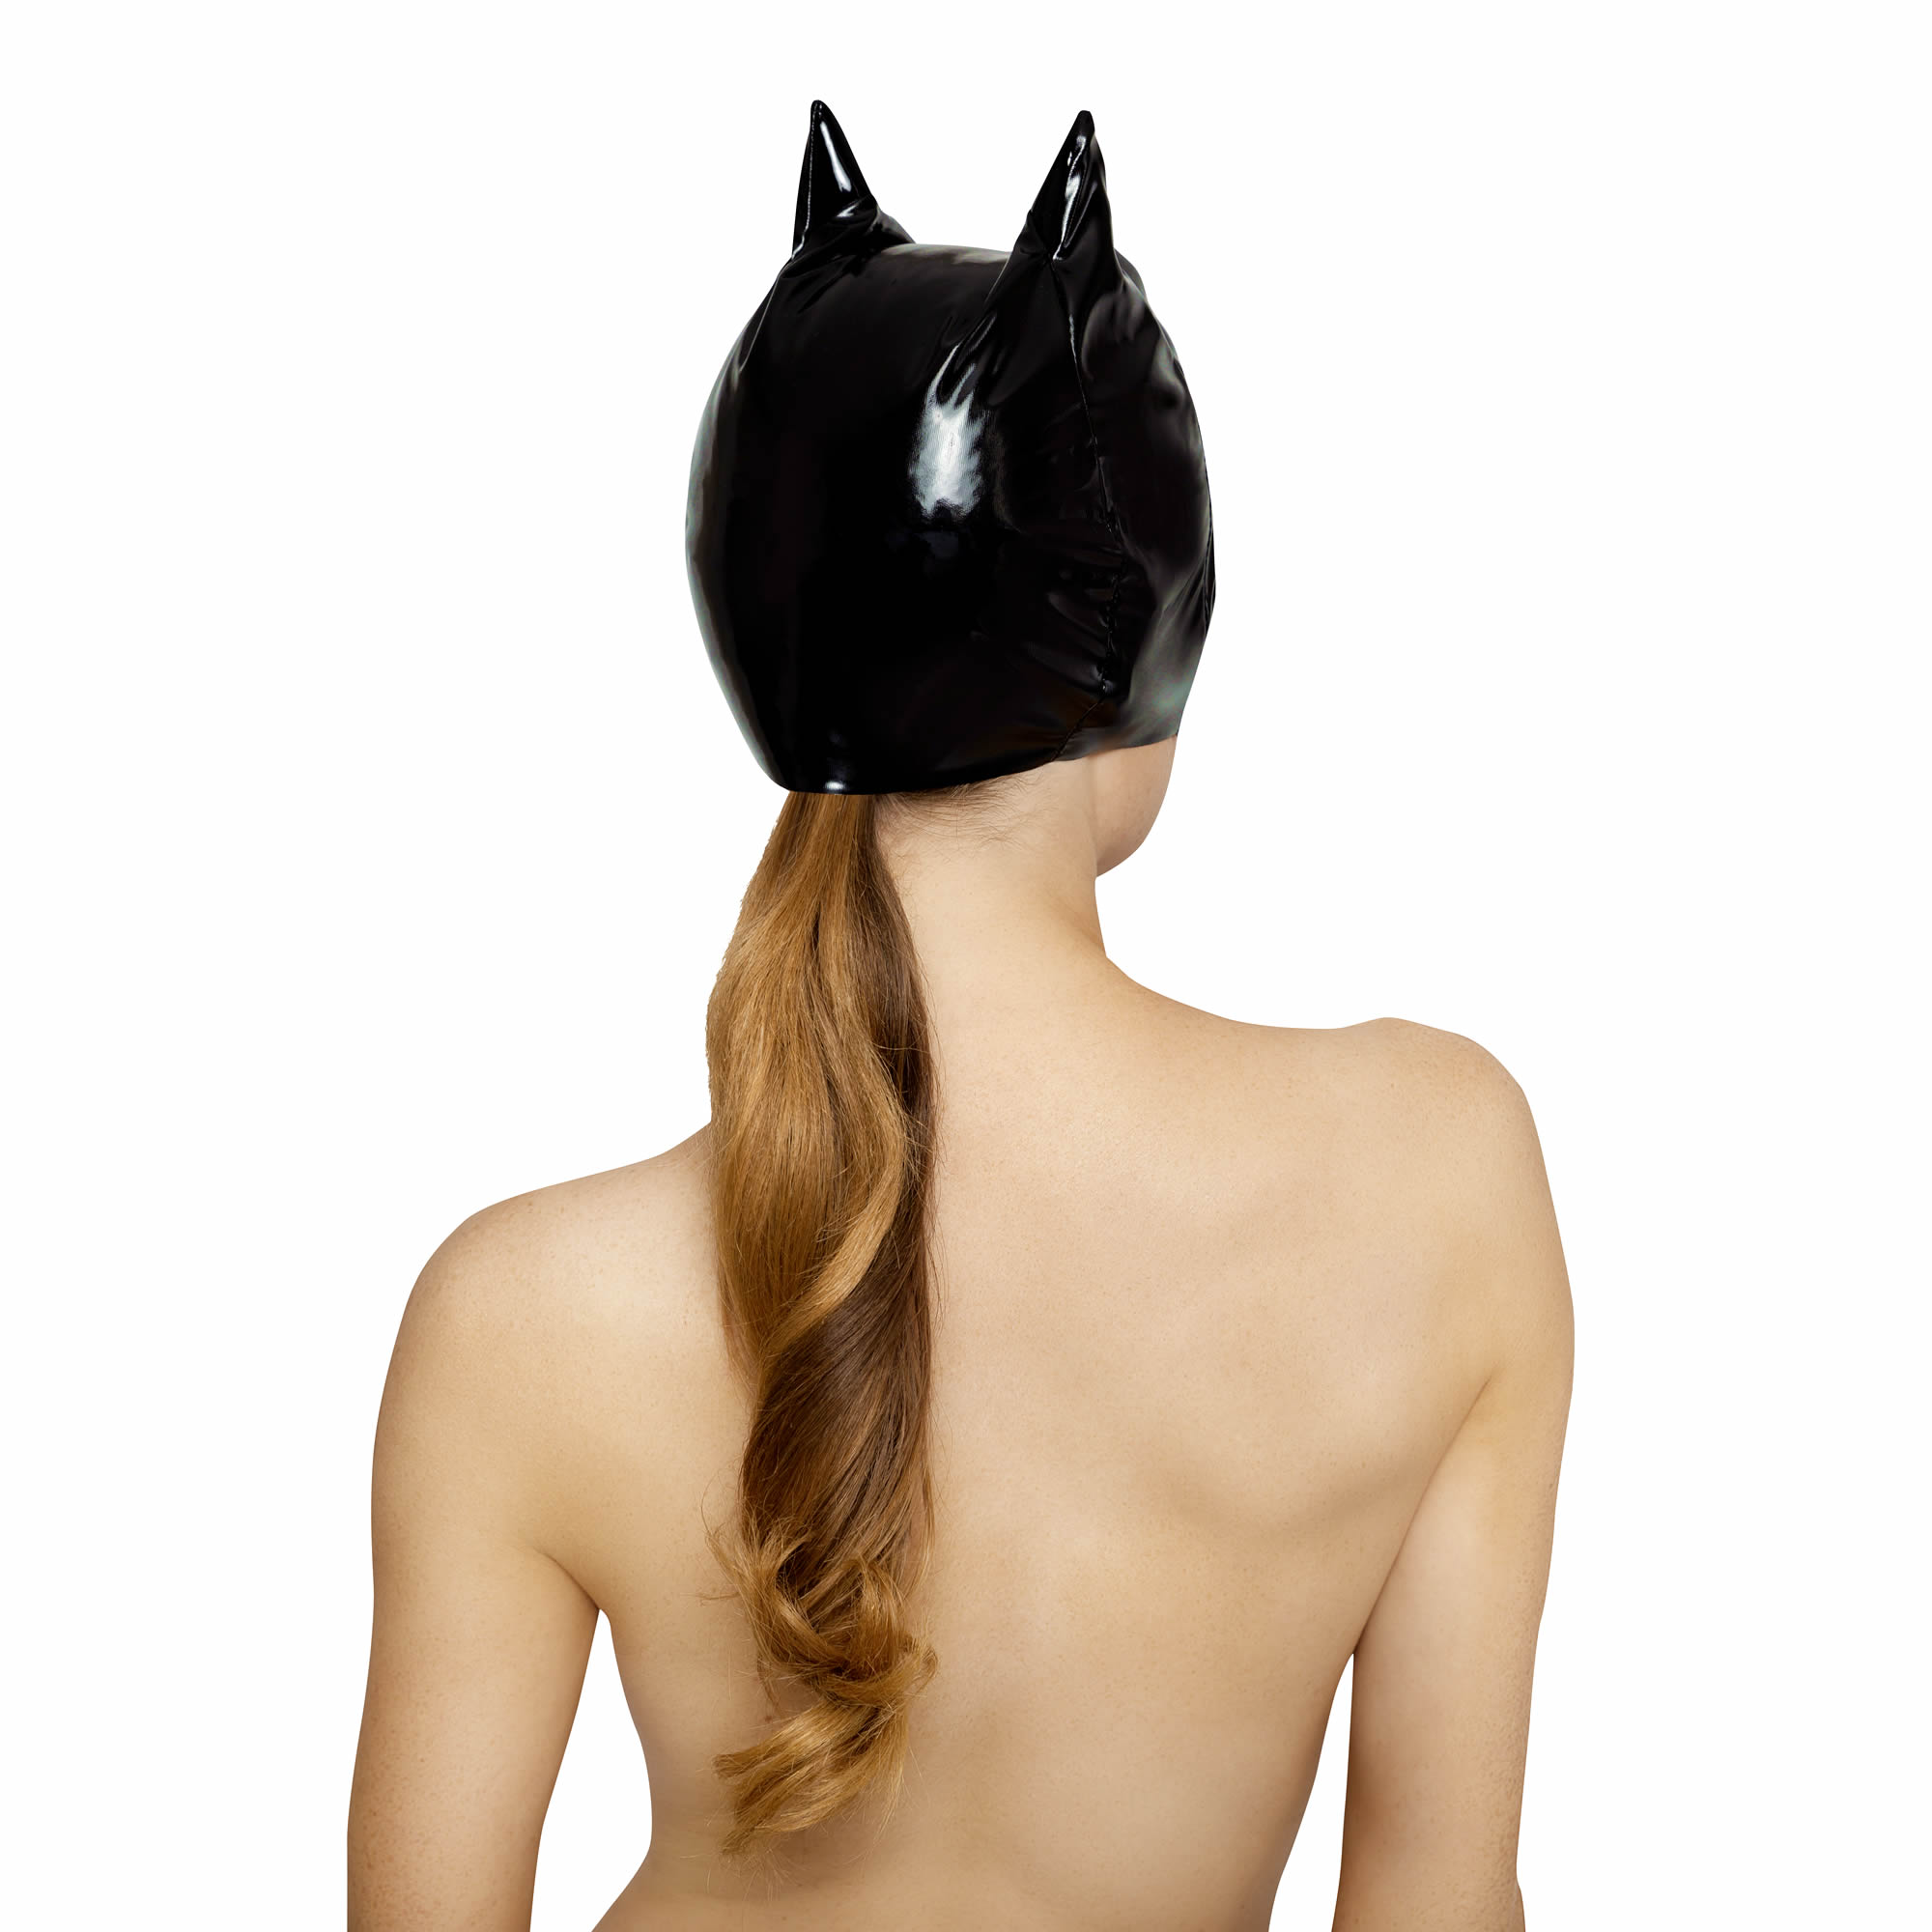 Catwoman Vinyl Mask